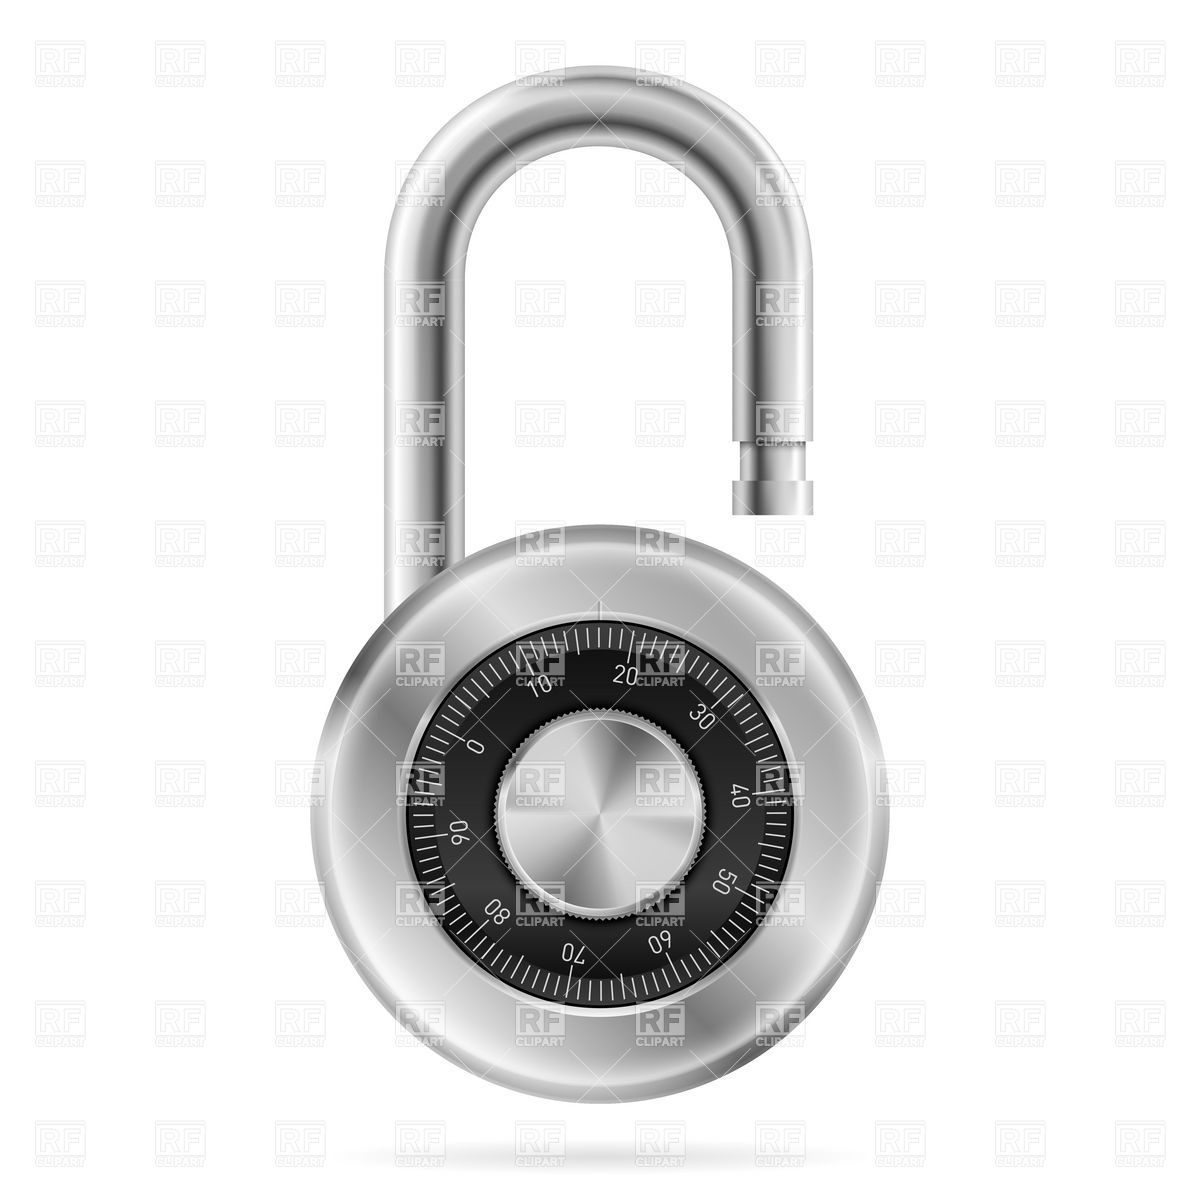 Unlocked Combination Lock Download Royalty Free Vector Clipart  Eps